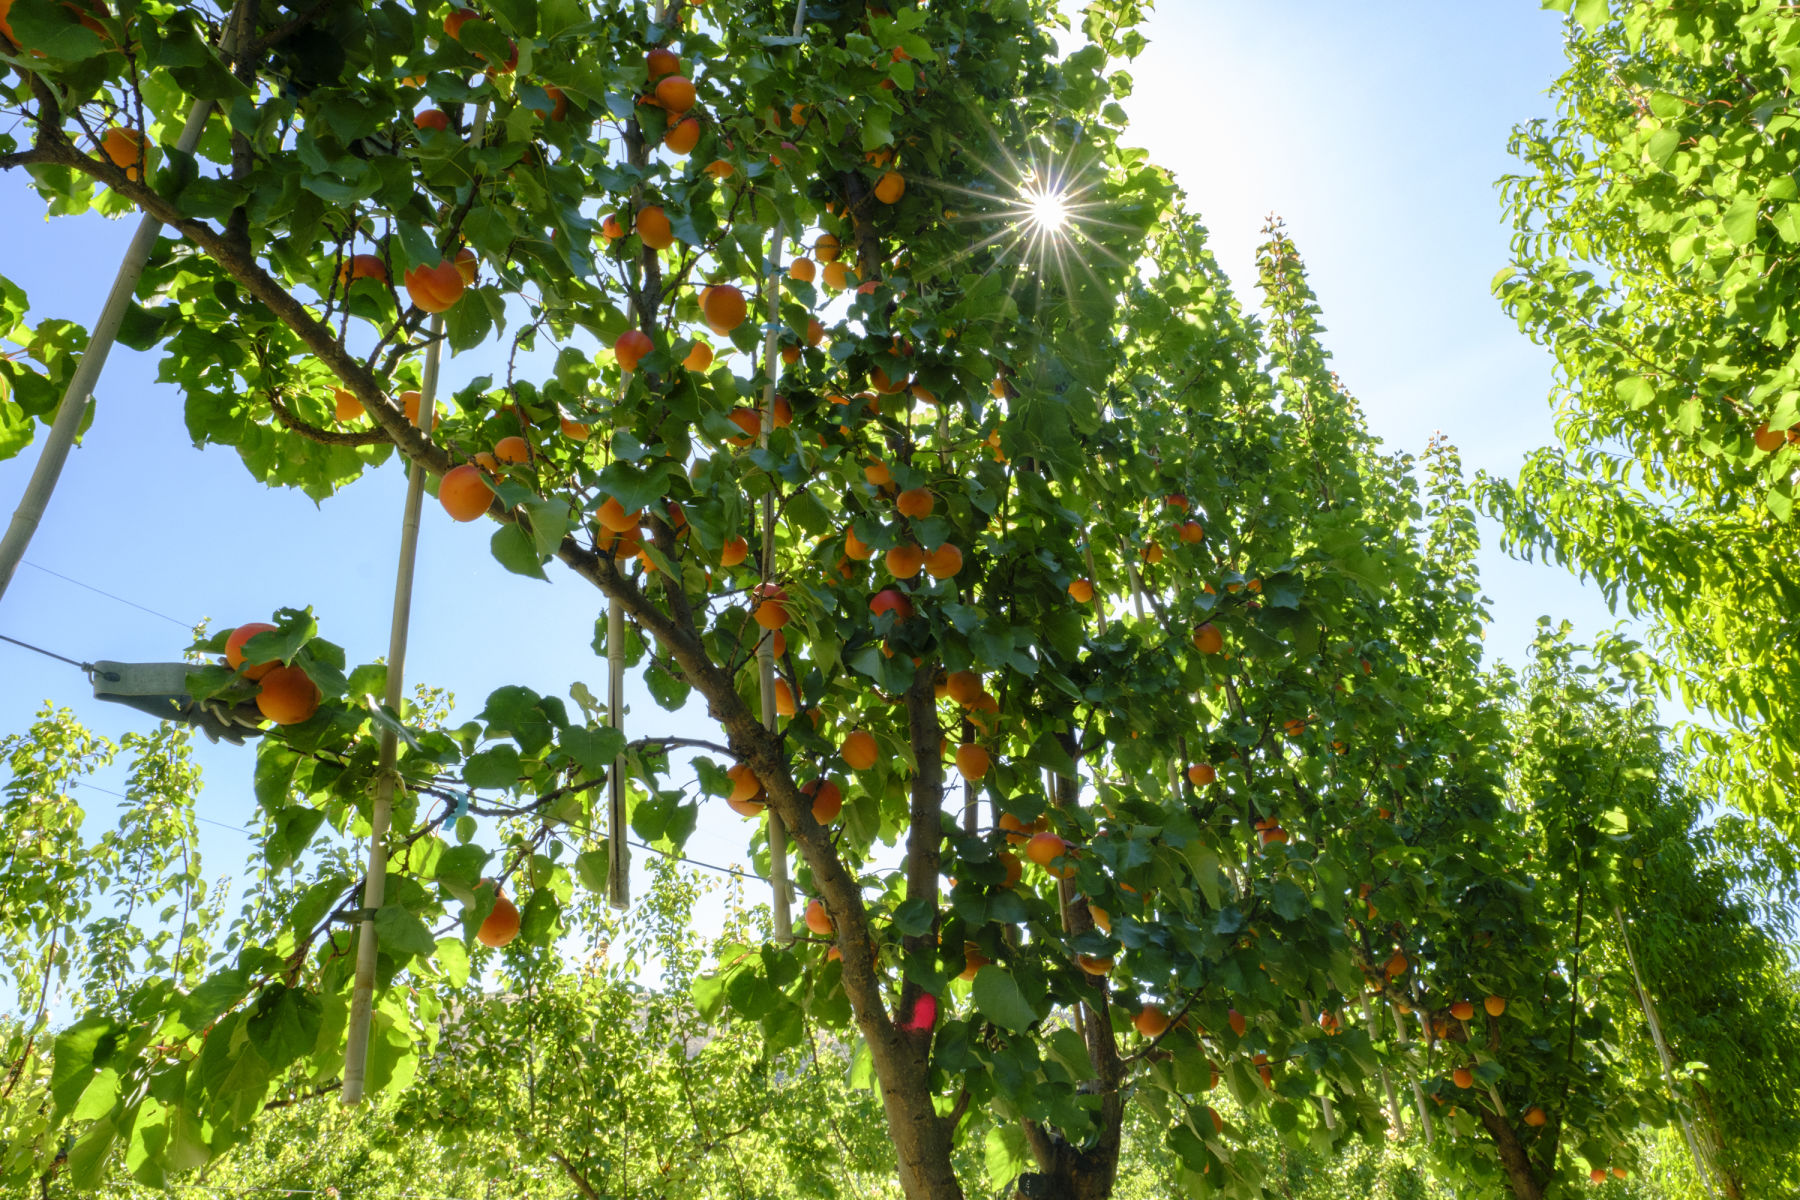 Summerfruit industry exploring ‘robot ready’ planting system